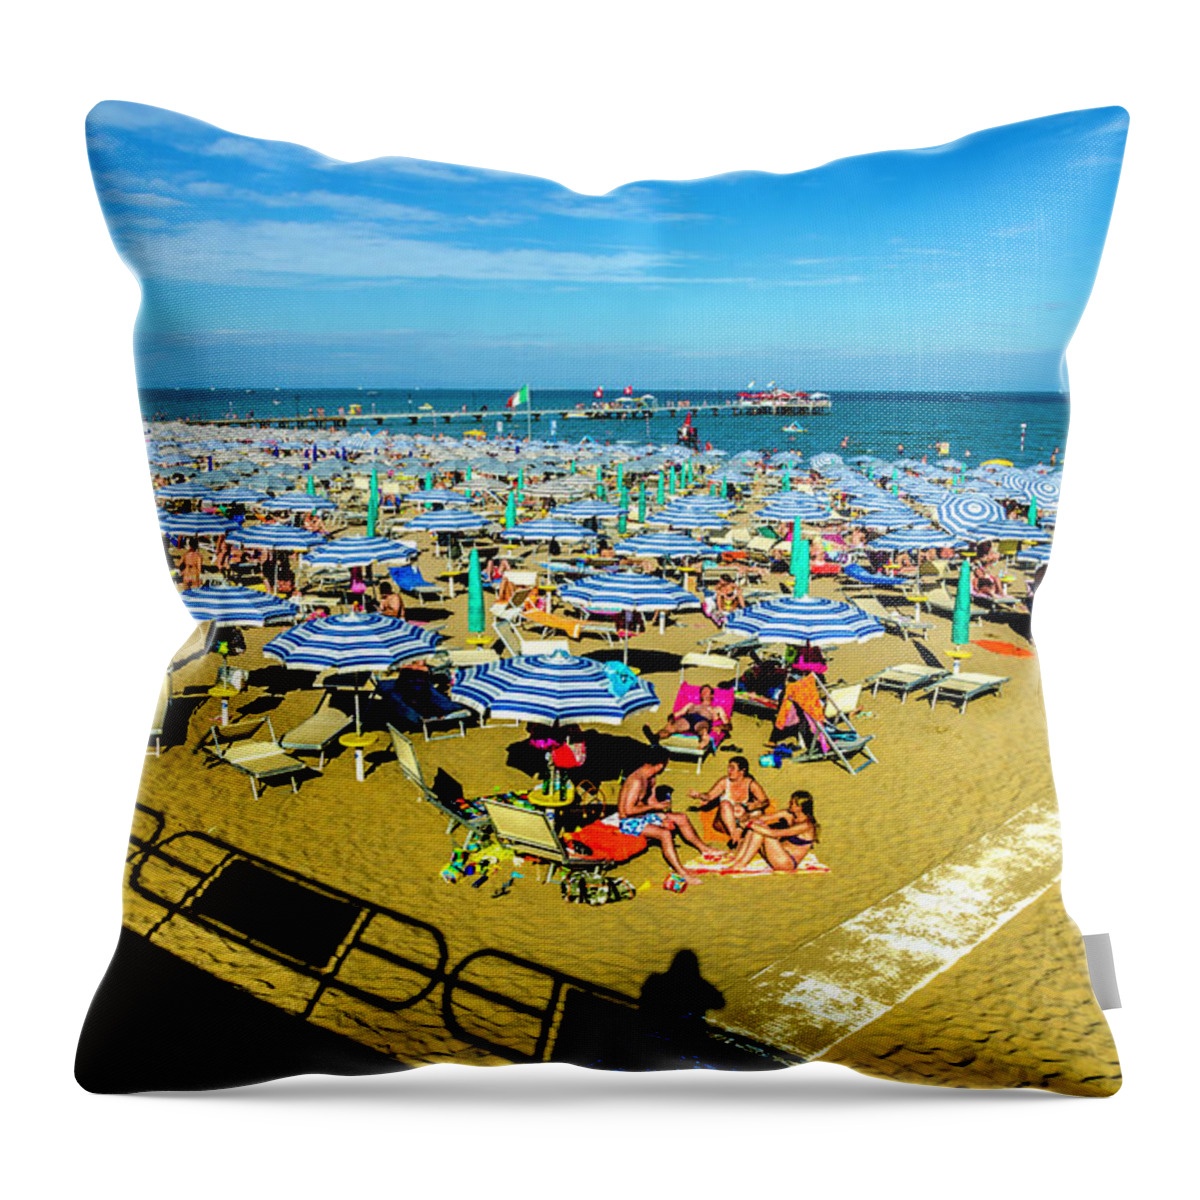 Beach Throw Pillow featuring the photograph Beach scene by Wolfgang Stocker